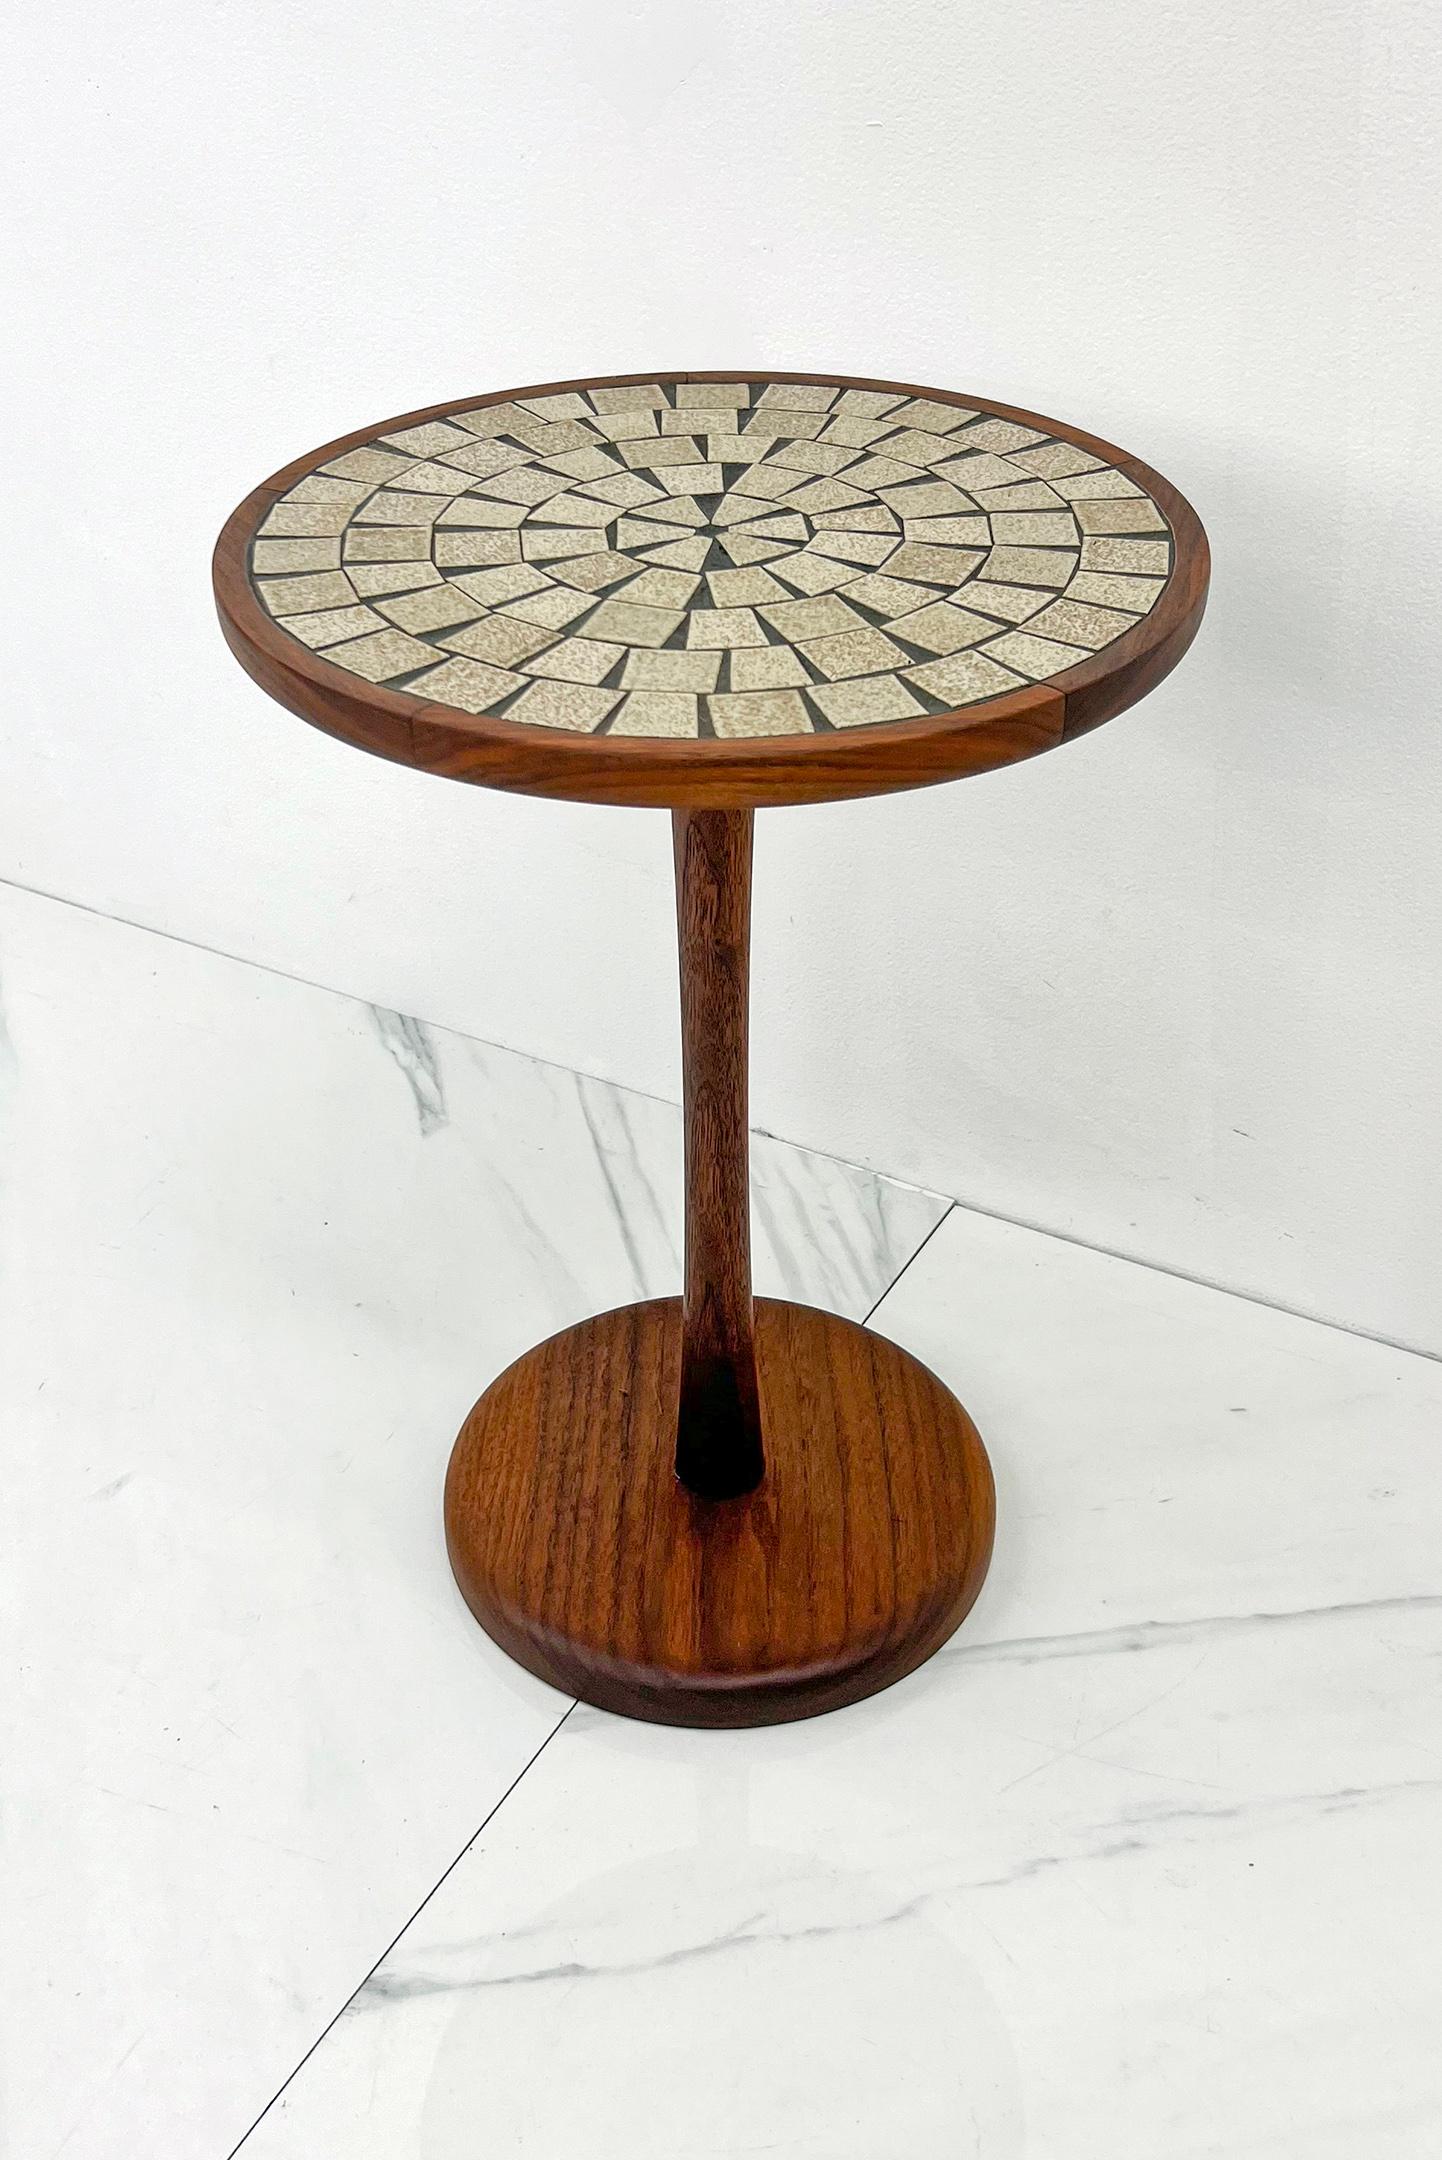 Gordon & Jane Martz Occassional Table, Teak, Ceramic, 1950's For Sale 7